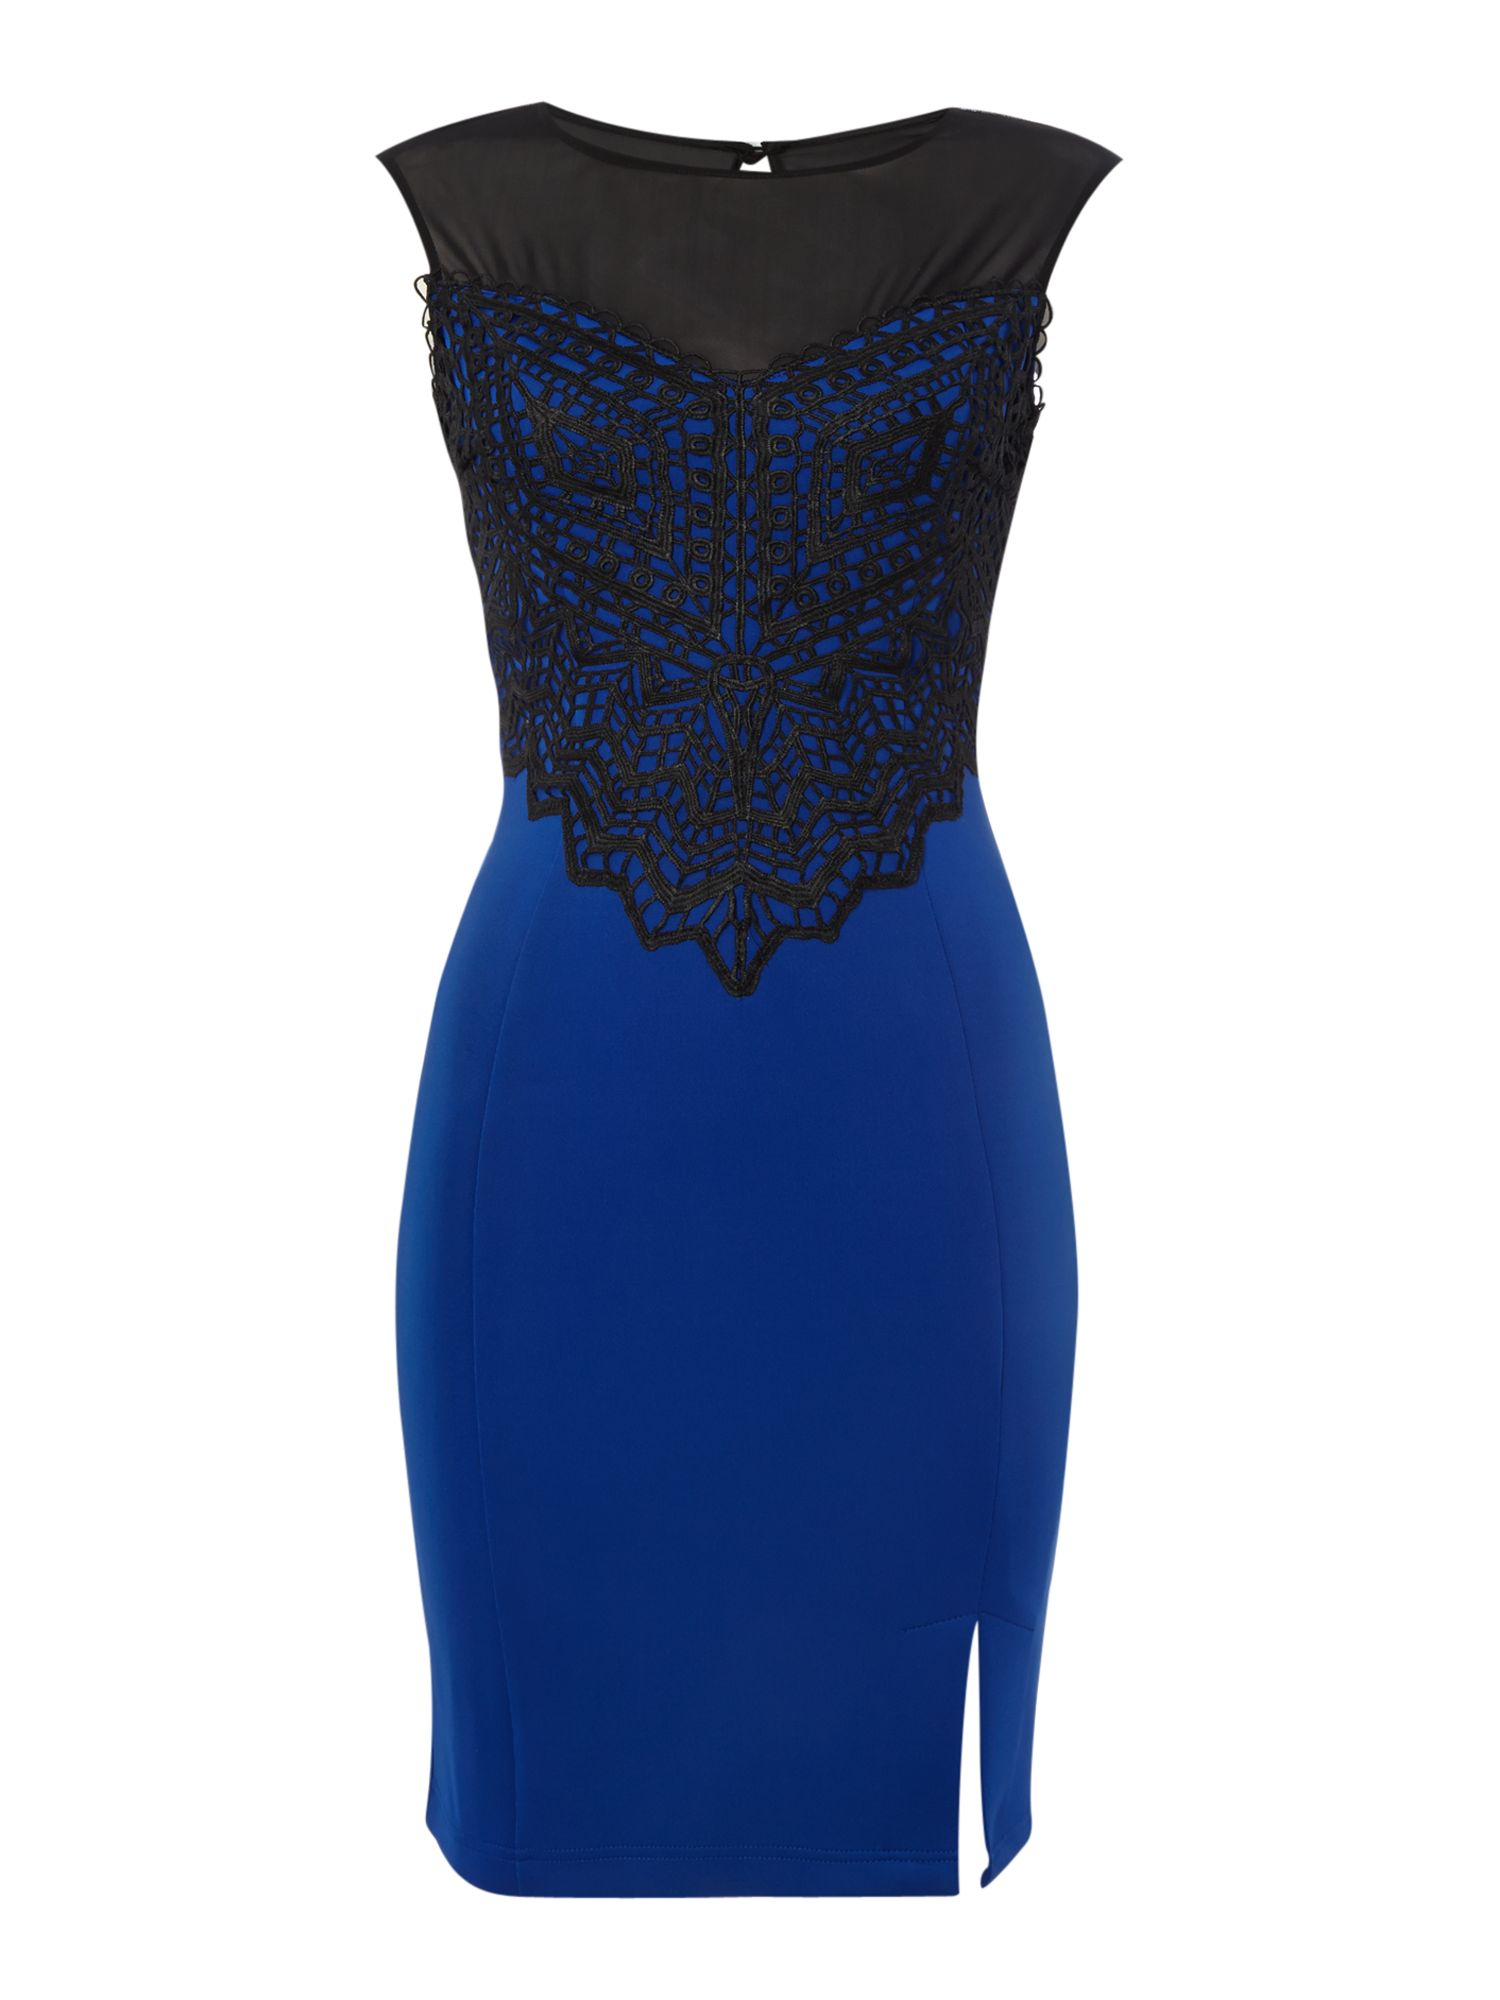 Lipsy Sleeveless Mesh Lace Top Bodycon Dress in Blue (Black & Blue) | Lyst